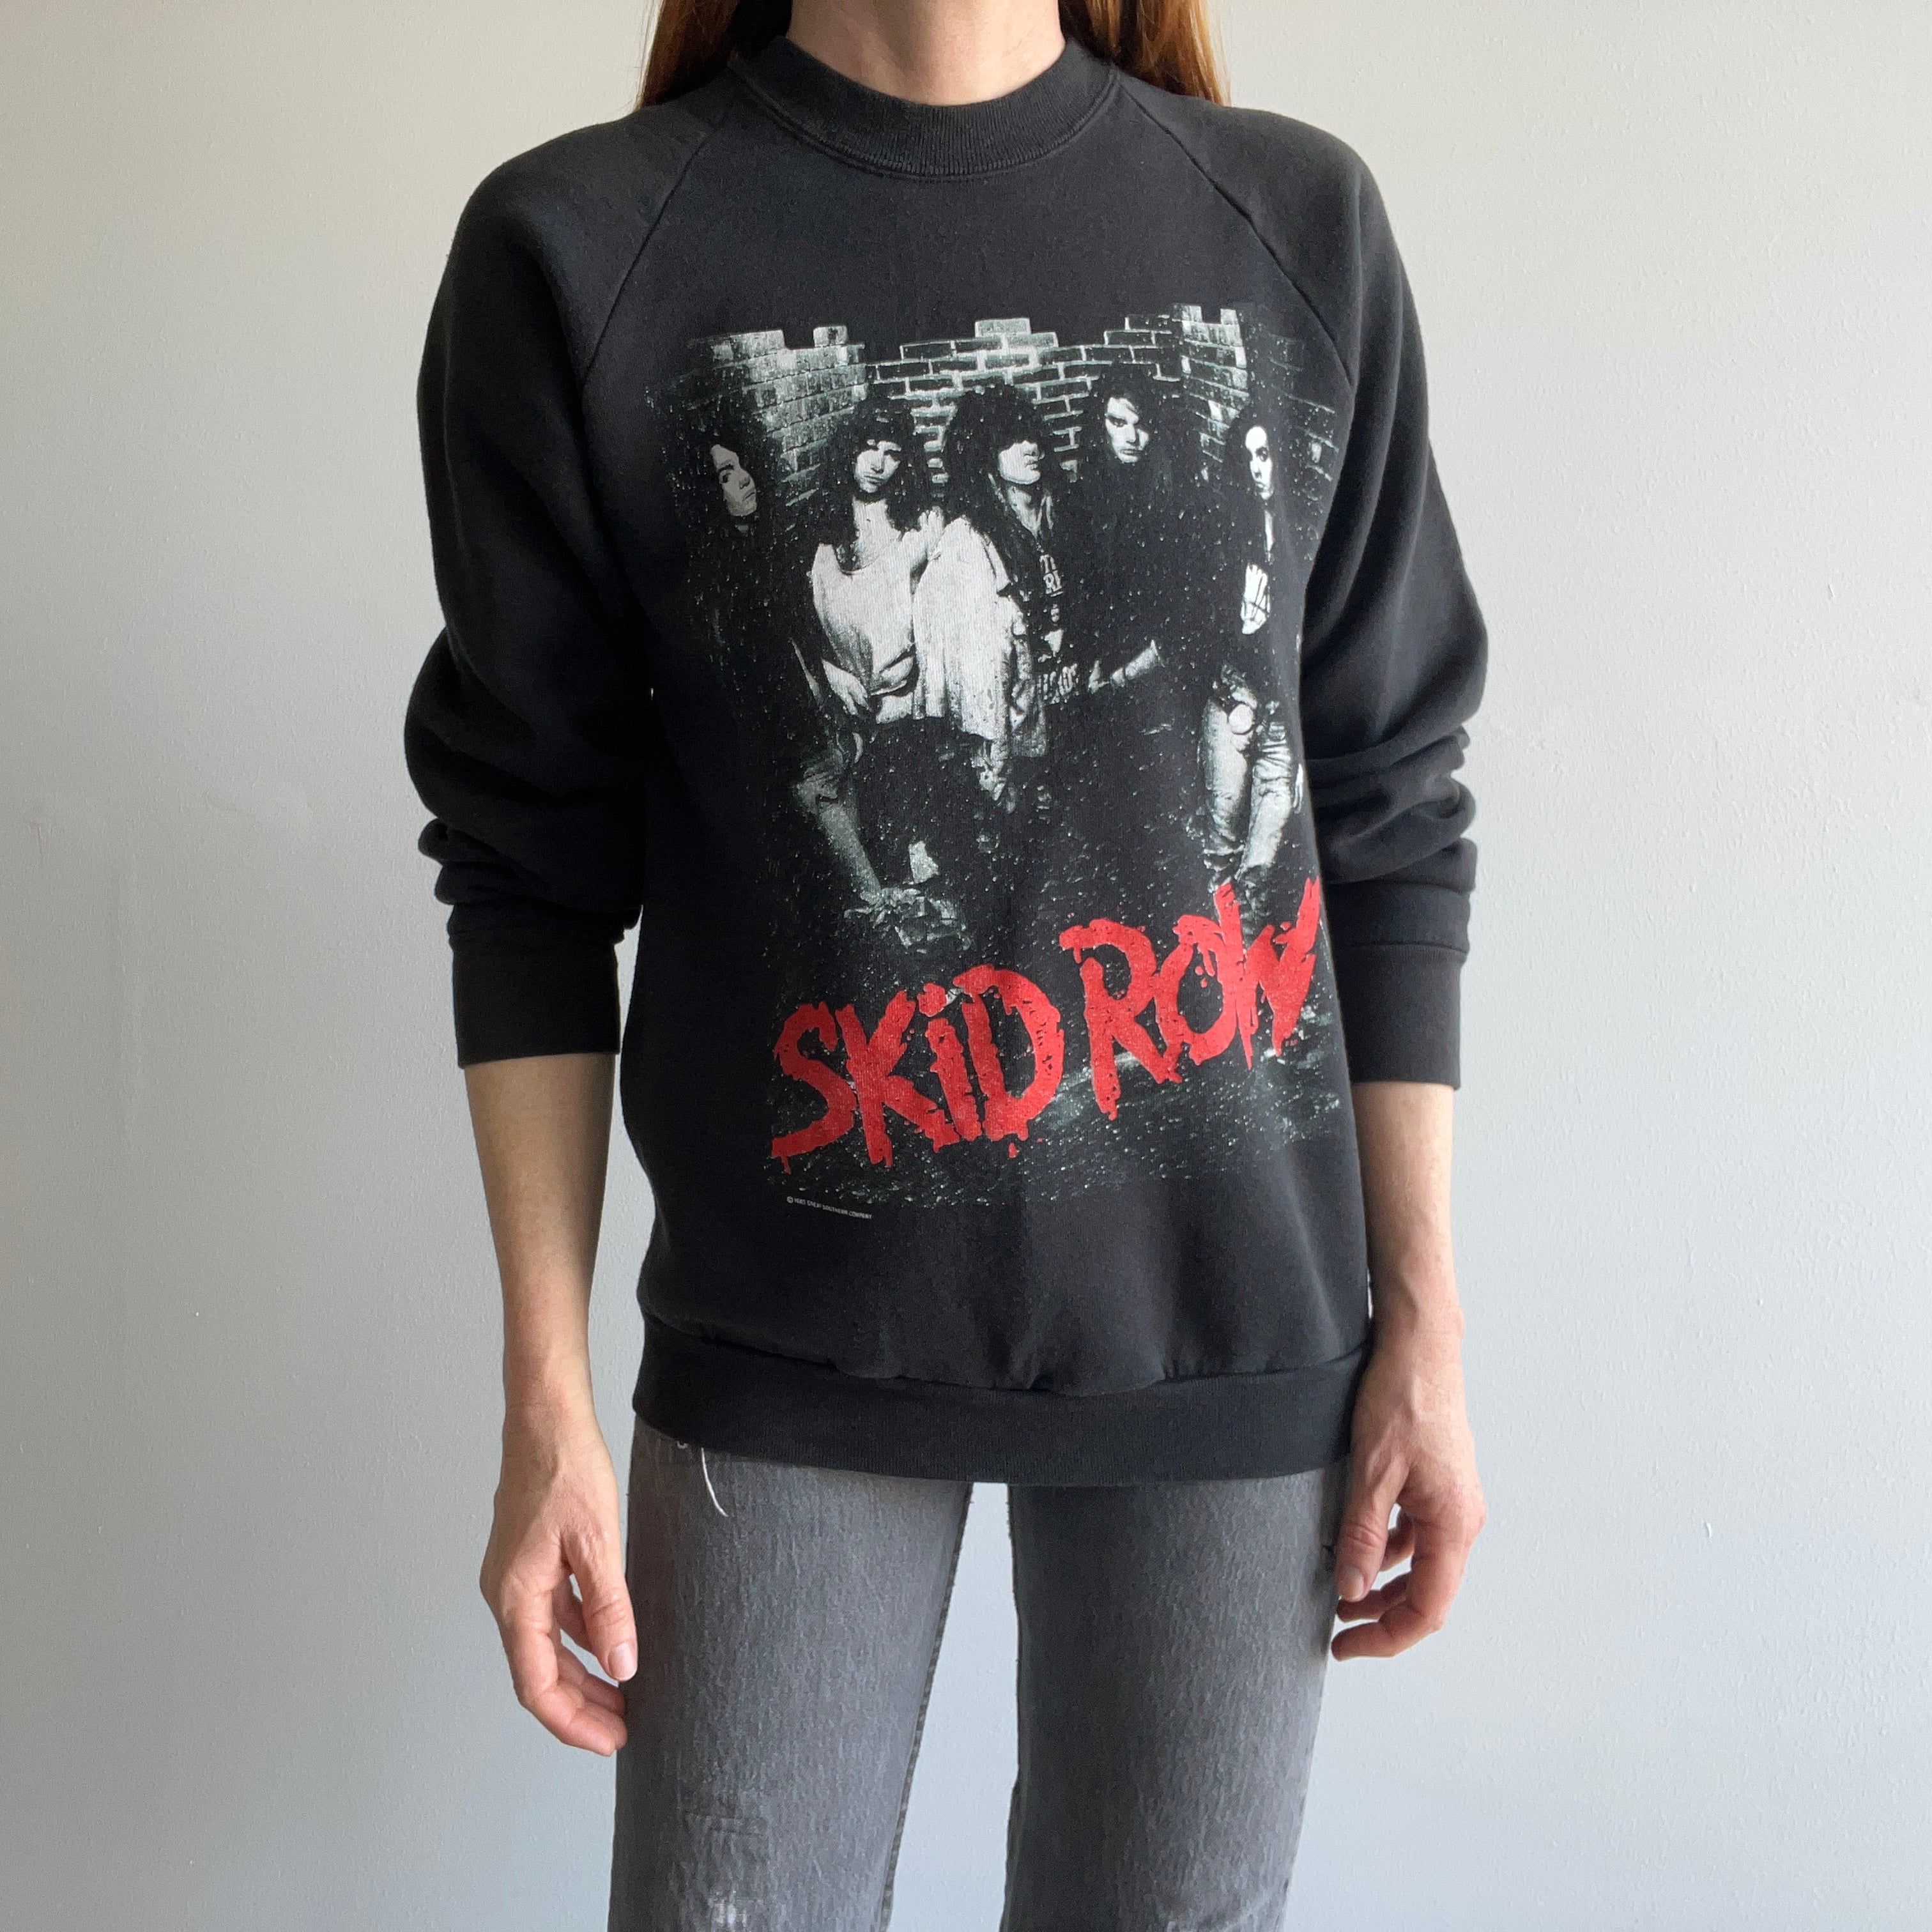 1990 Skid Row Self Titled Album Sweatshirt